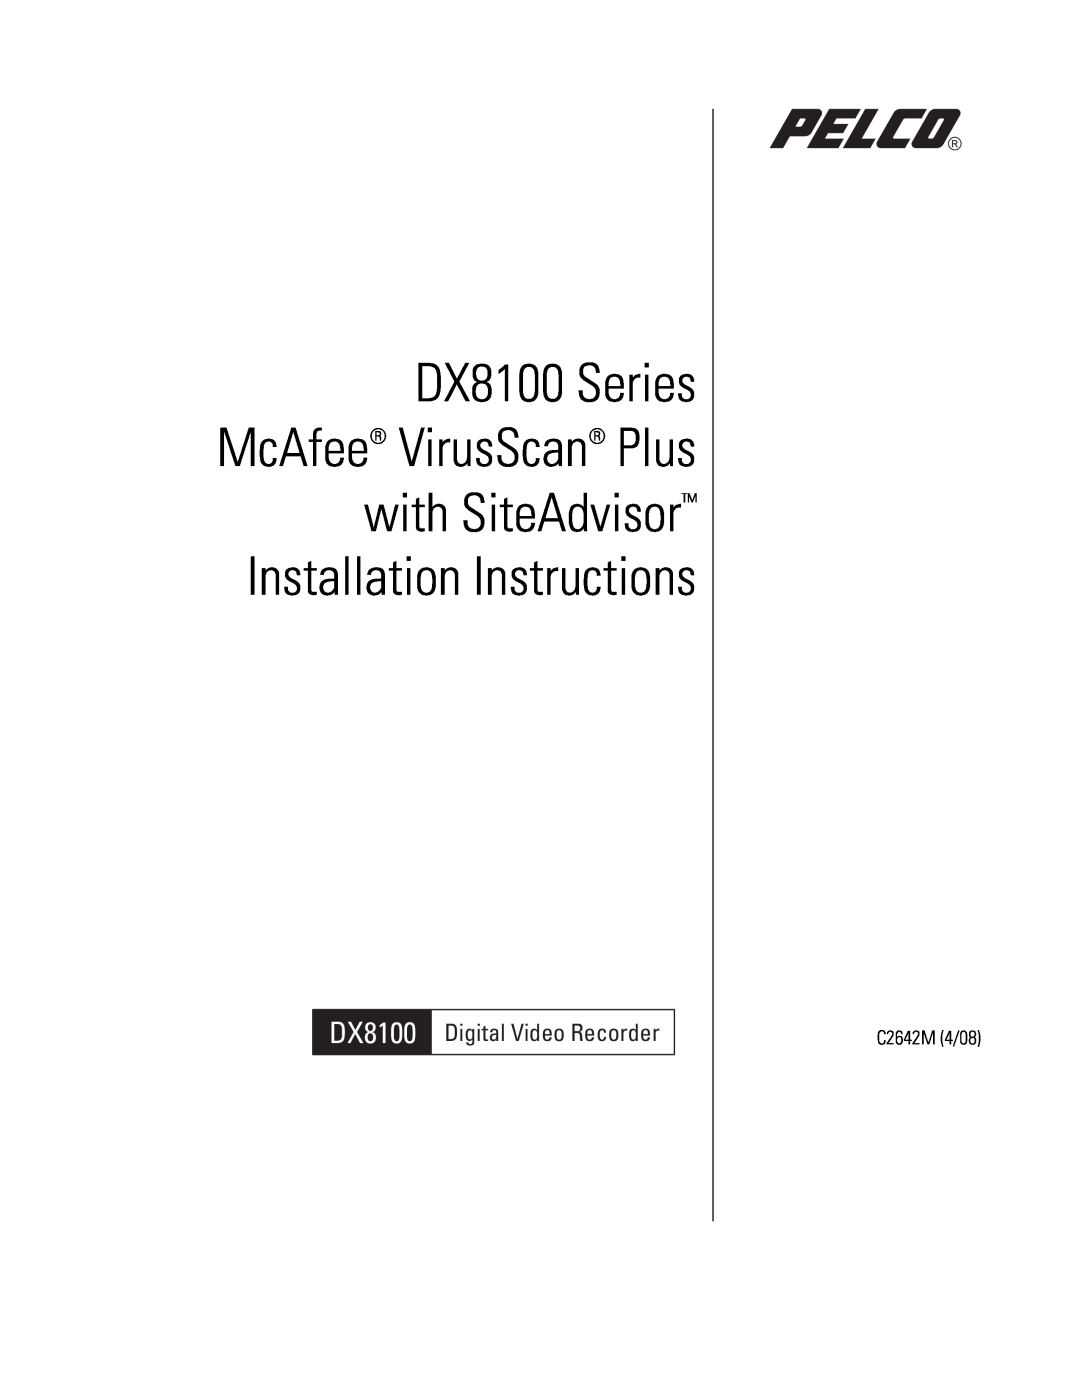 Pelco dx8100 manual C2629M-A6/07, DX8100 Series Digital Video Recorder, I N S T A L L A T I O N 